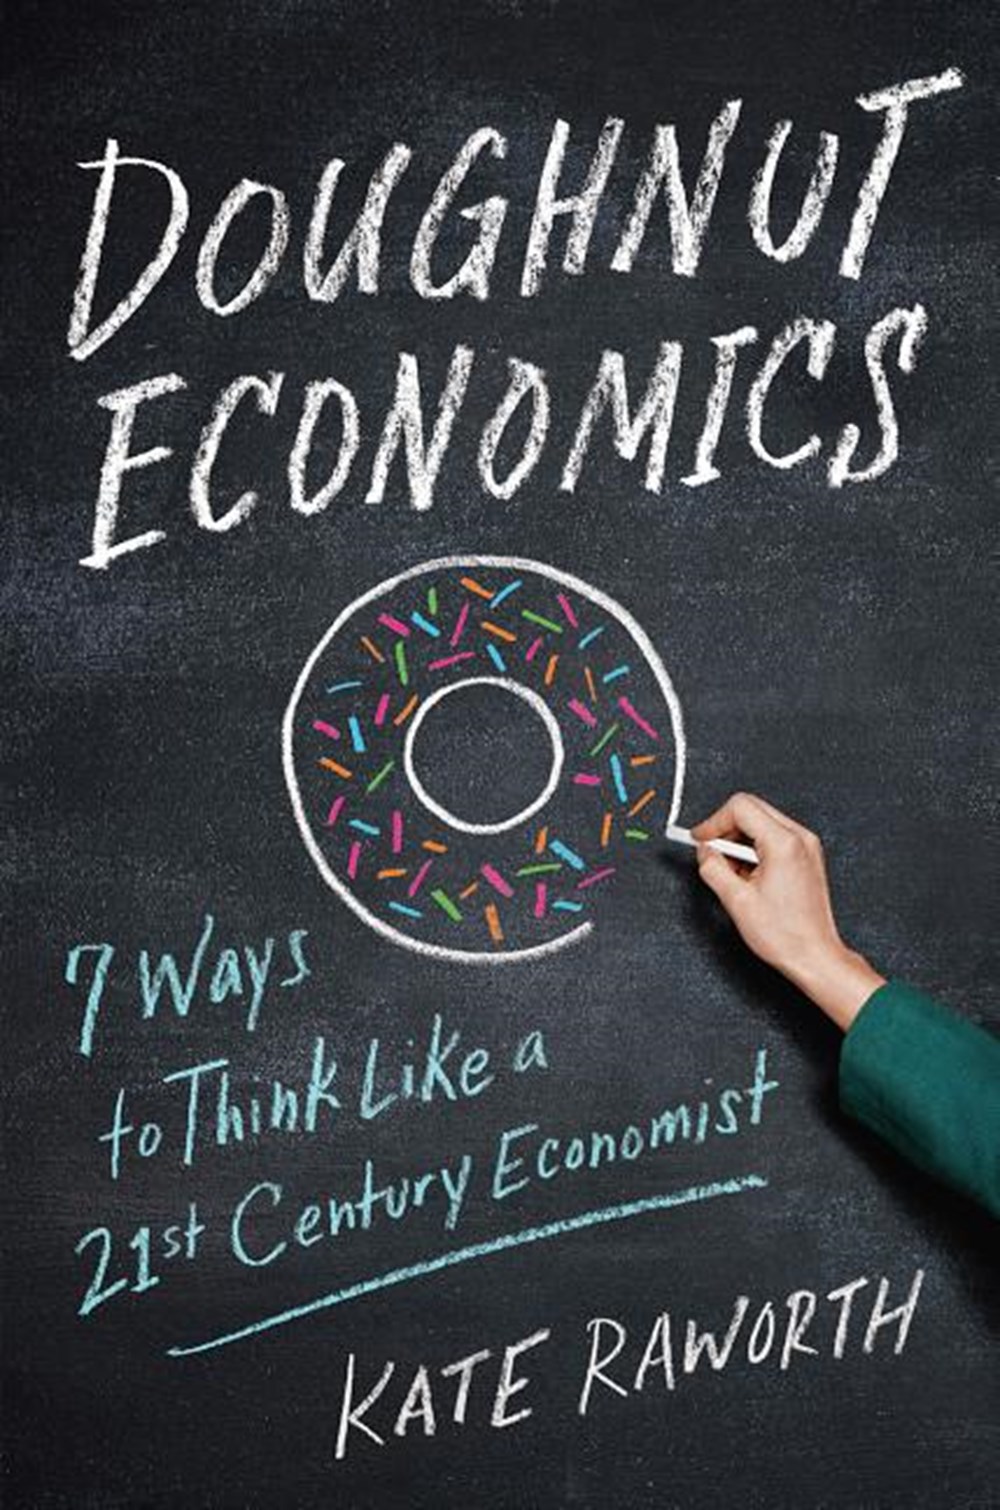 Doughnut Economics Seven Ways to Think Like a 21st-Century Economist